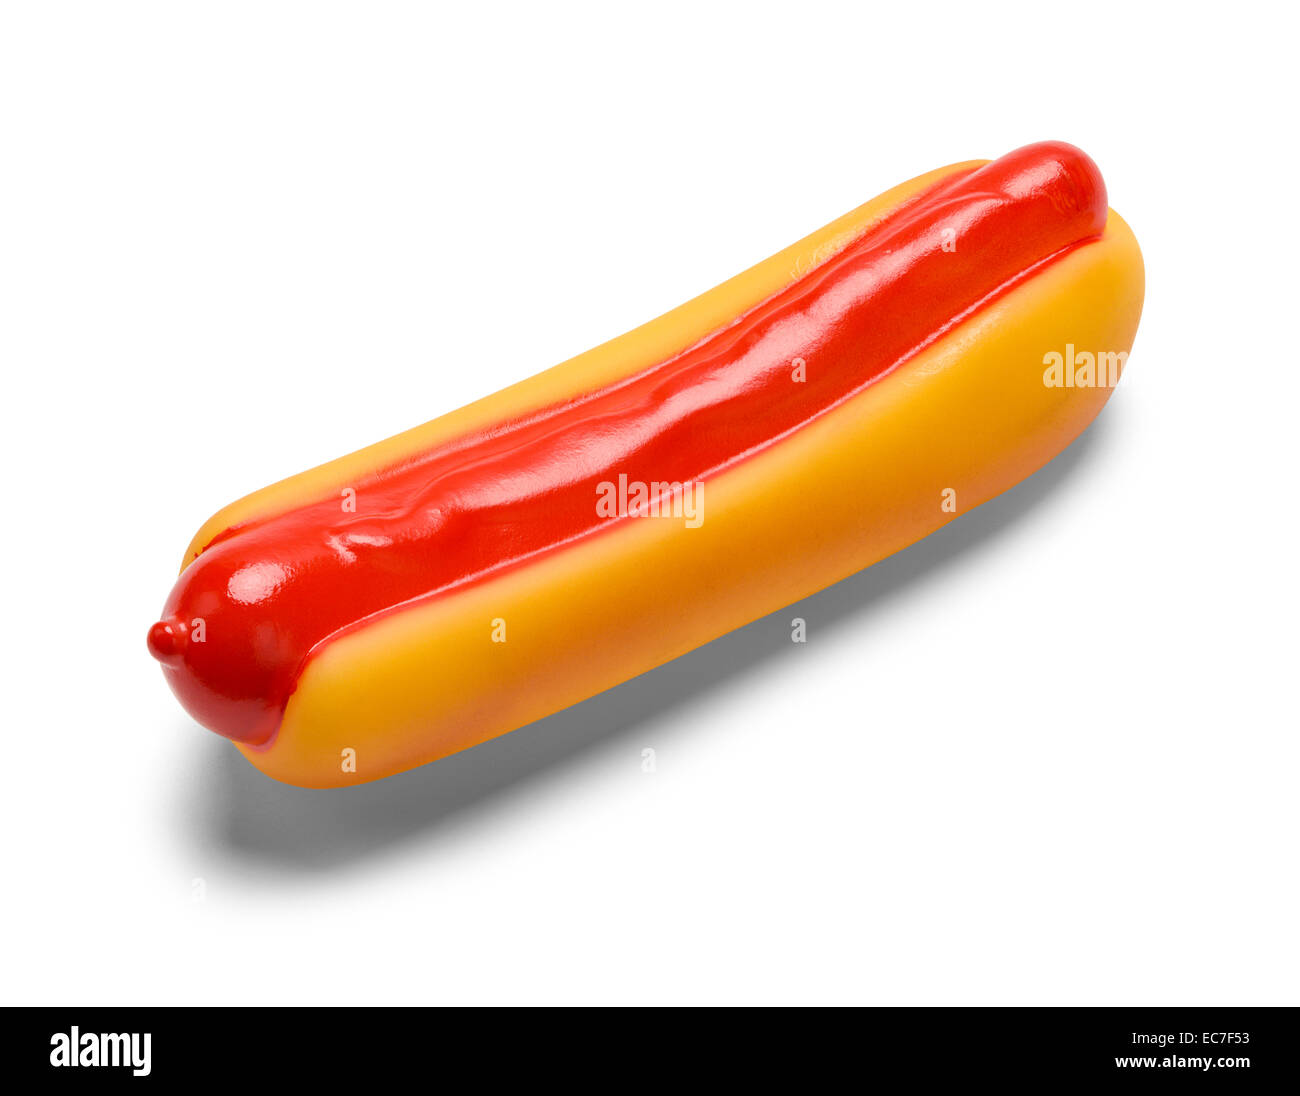 Squeaky Plastic Hot Dog Pet Toy Isolated on White Background. Stock Photo